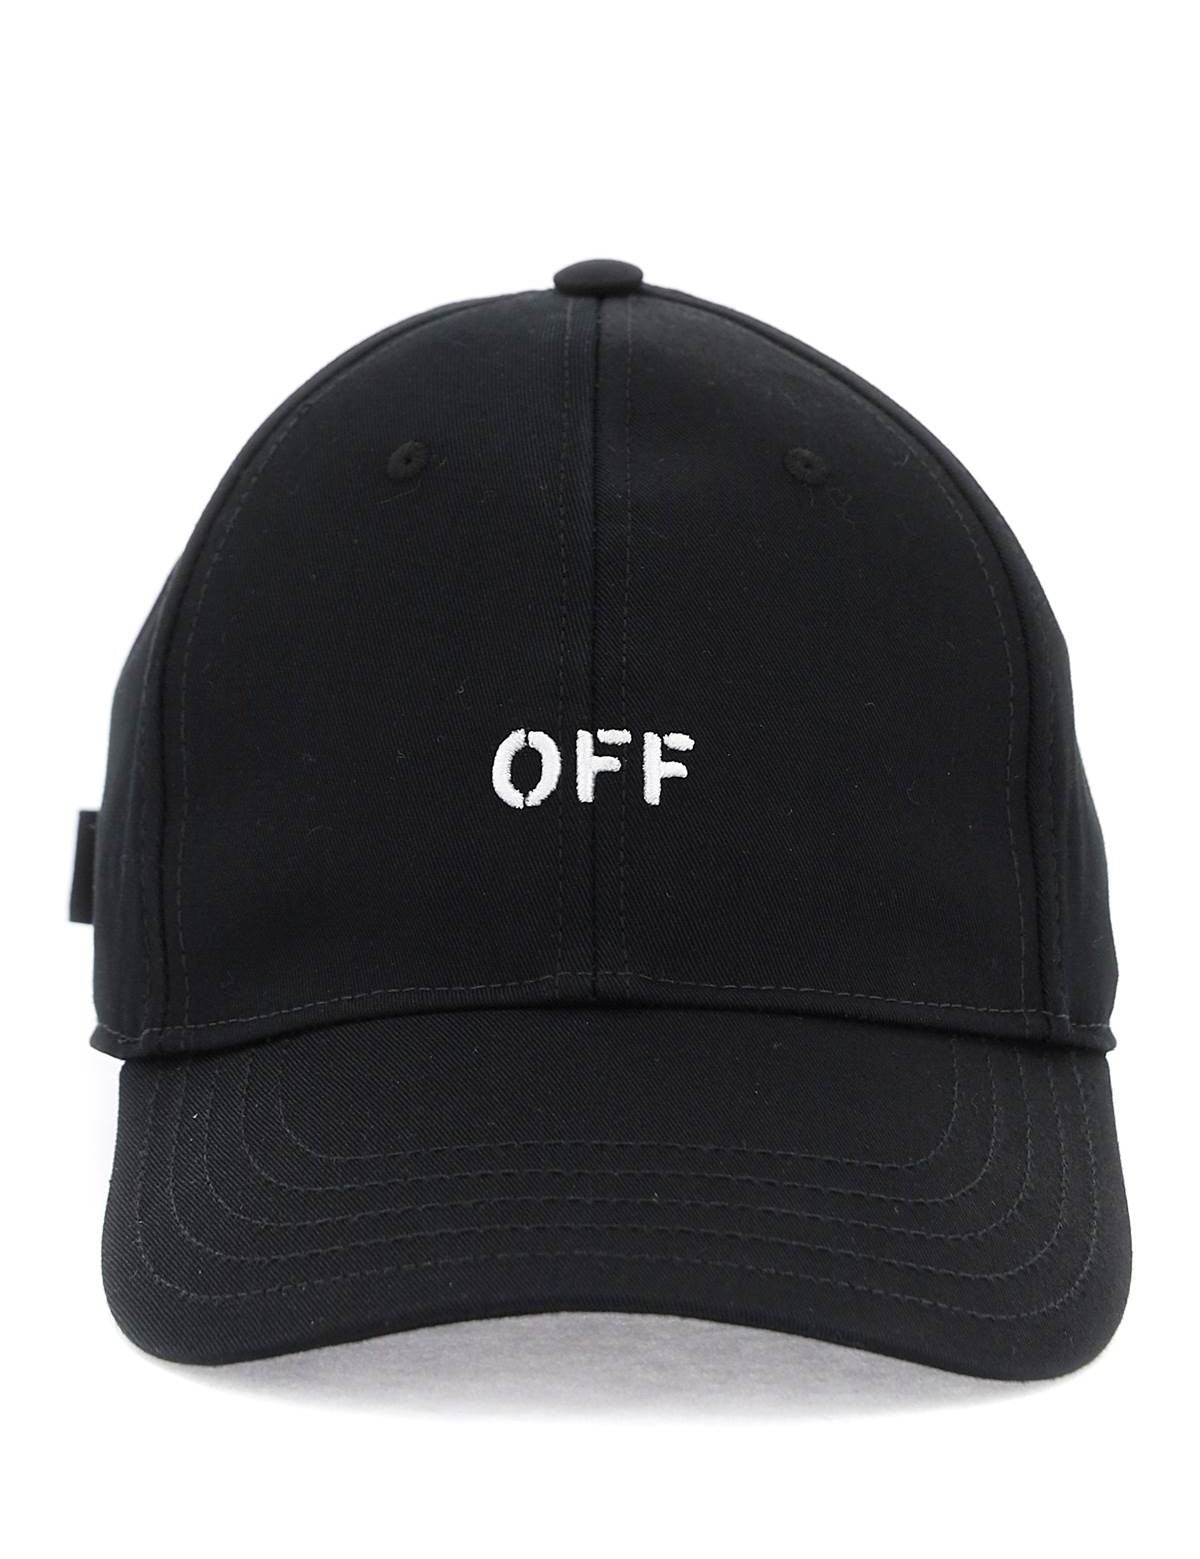 off-white-baseball-cap-with-off-logo.jpg